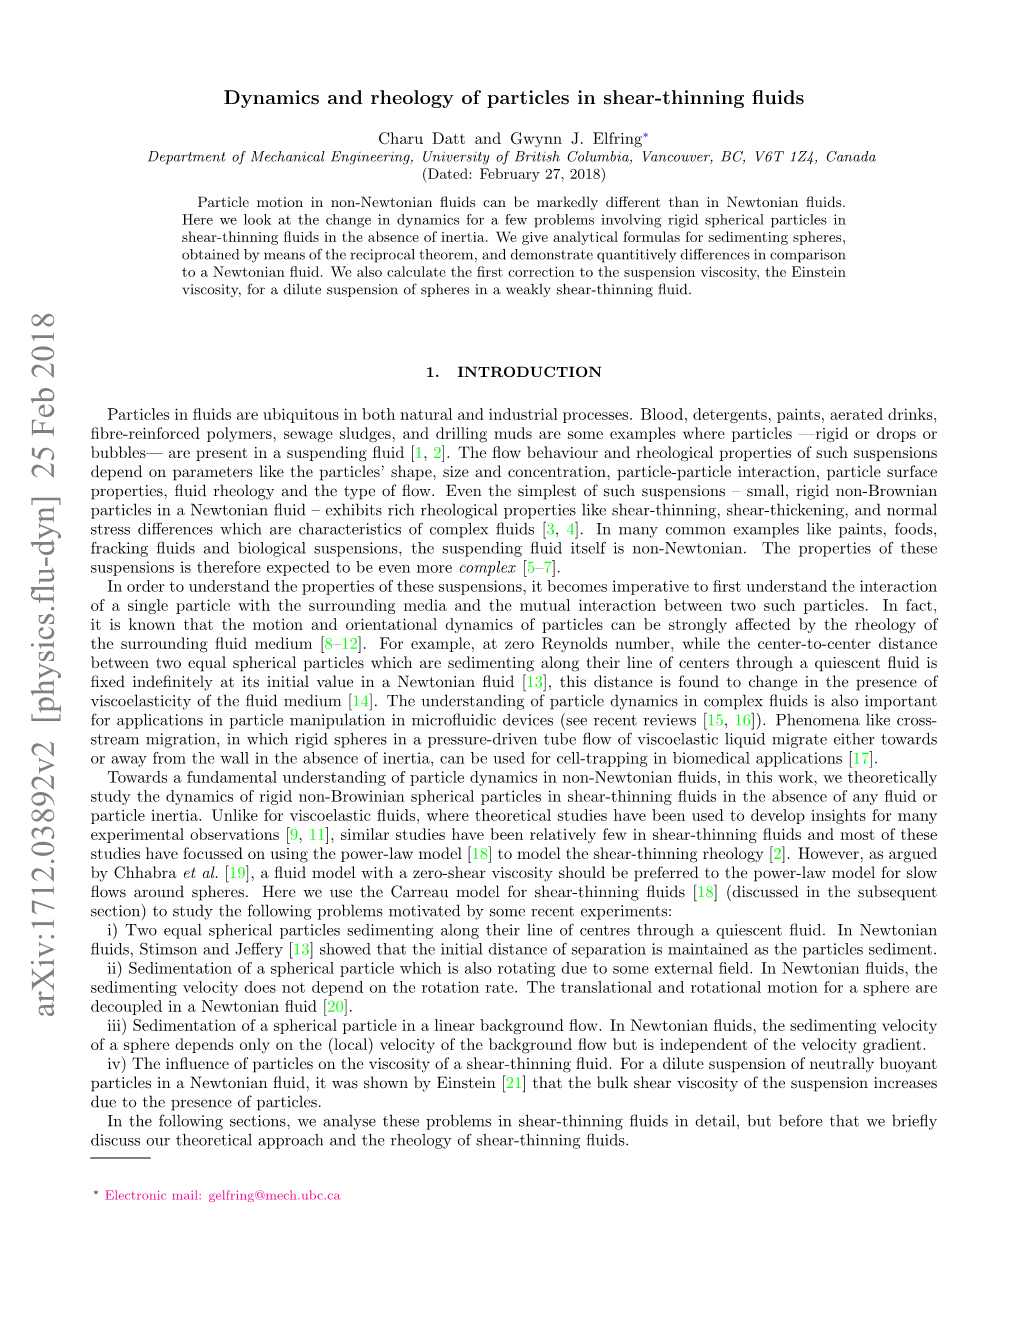 Arxiv:1712.03892V2 [Physics.Flu-Dyn] 25 Feb 2018 Iii) Sedimentation of a Spherical Particle in a Linear Background ﬂow